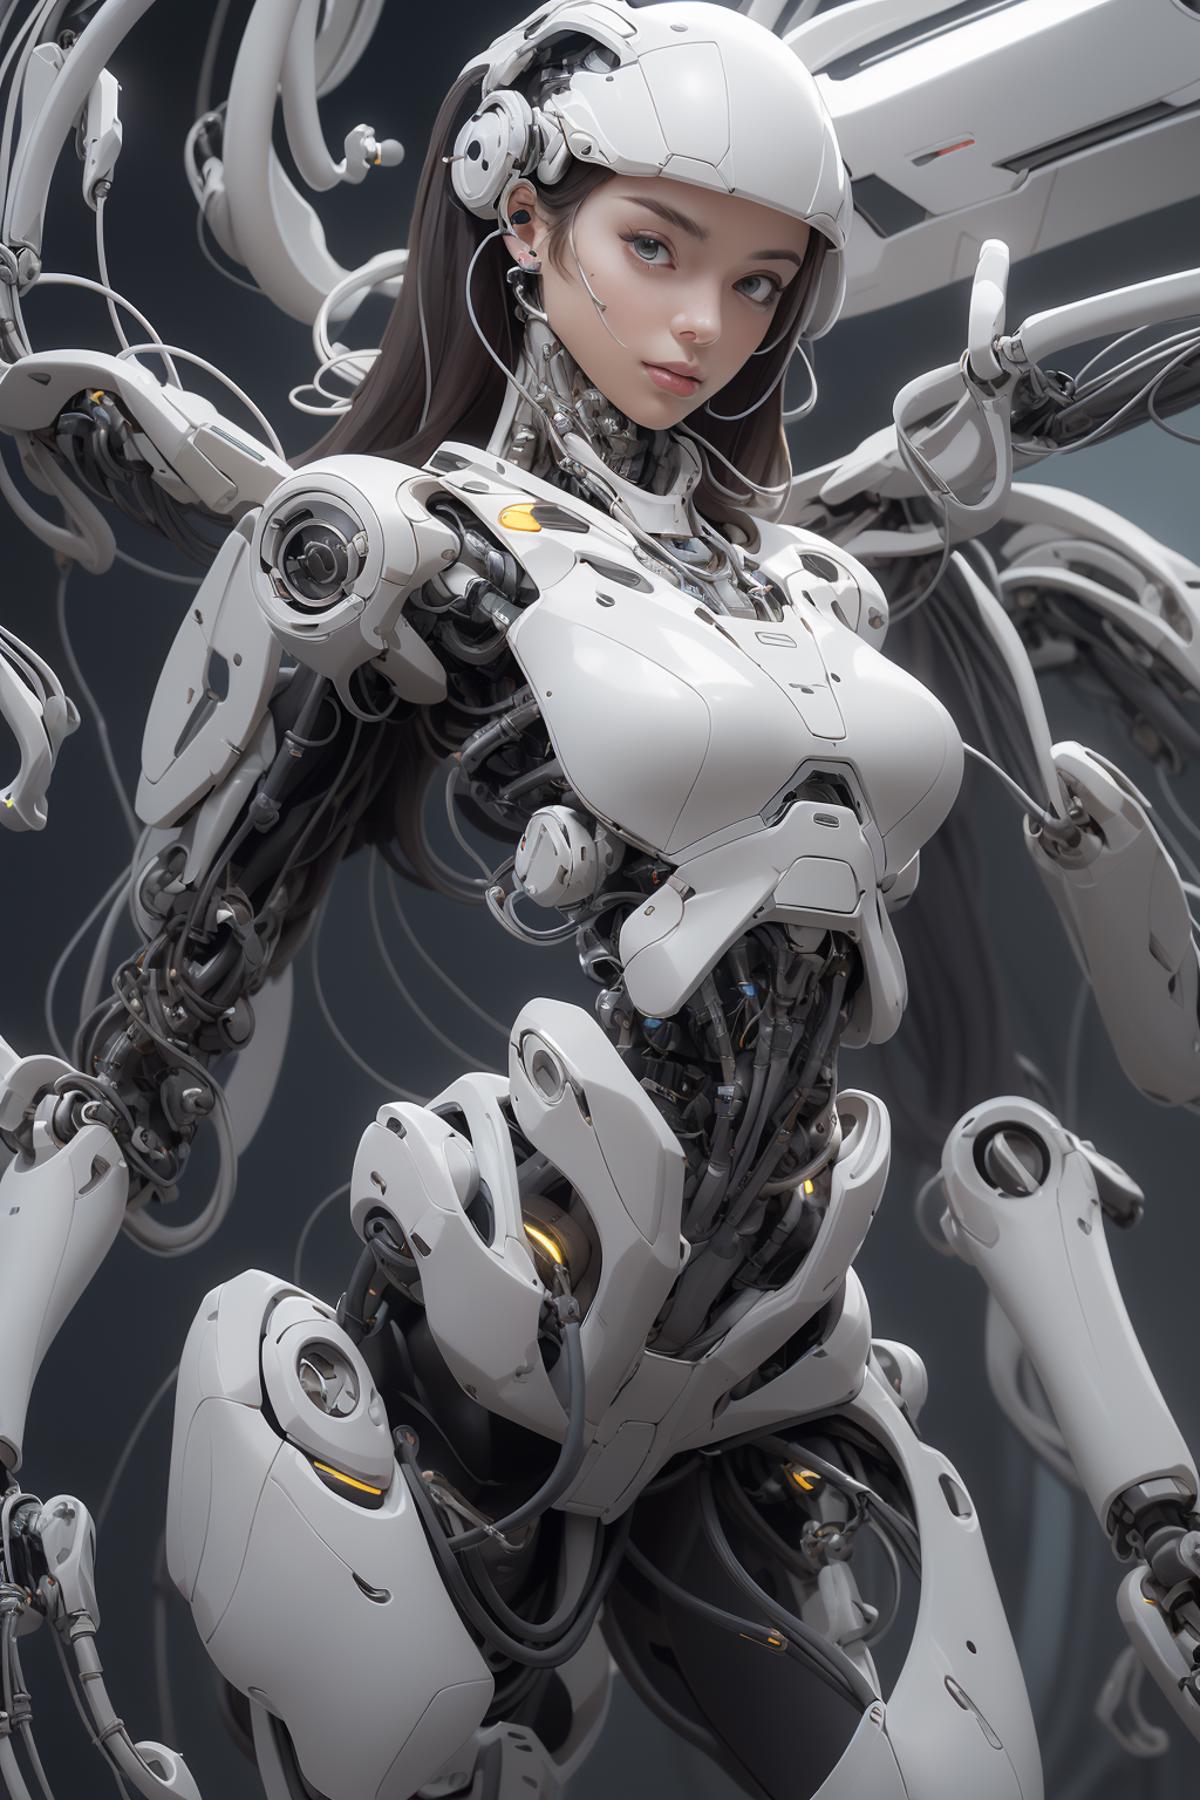 AI model image by daohuozhe428569